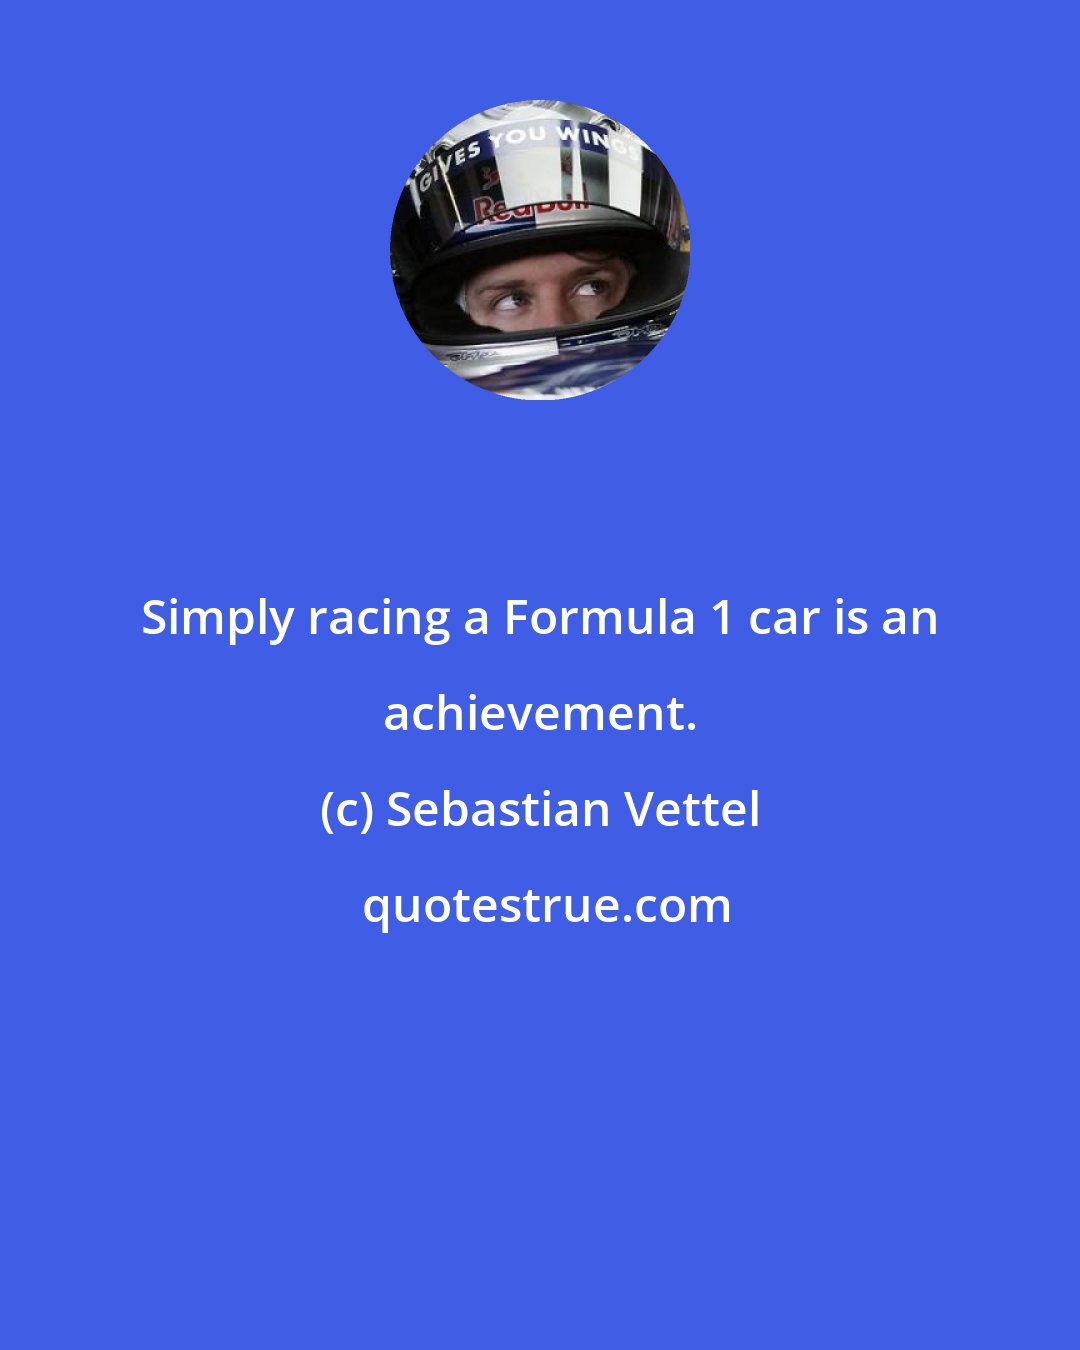 Sebastian Vettel: Simply racing a Formula 1 car is an achievement.